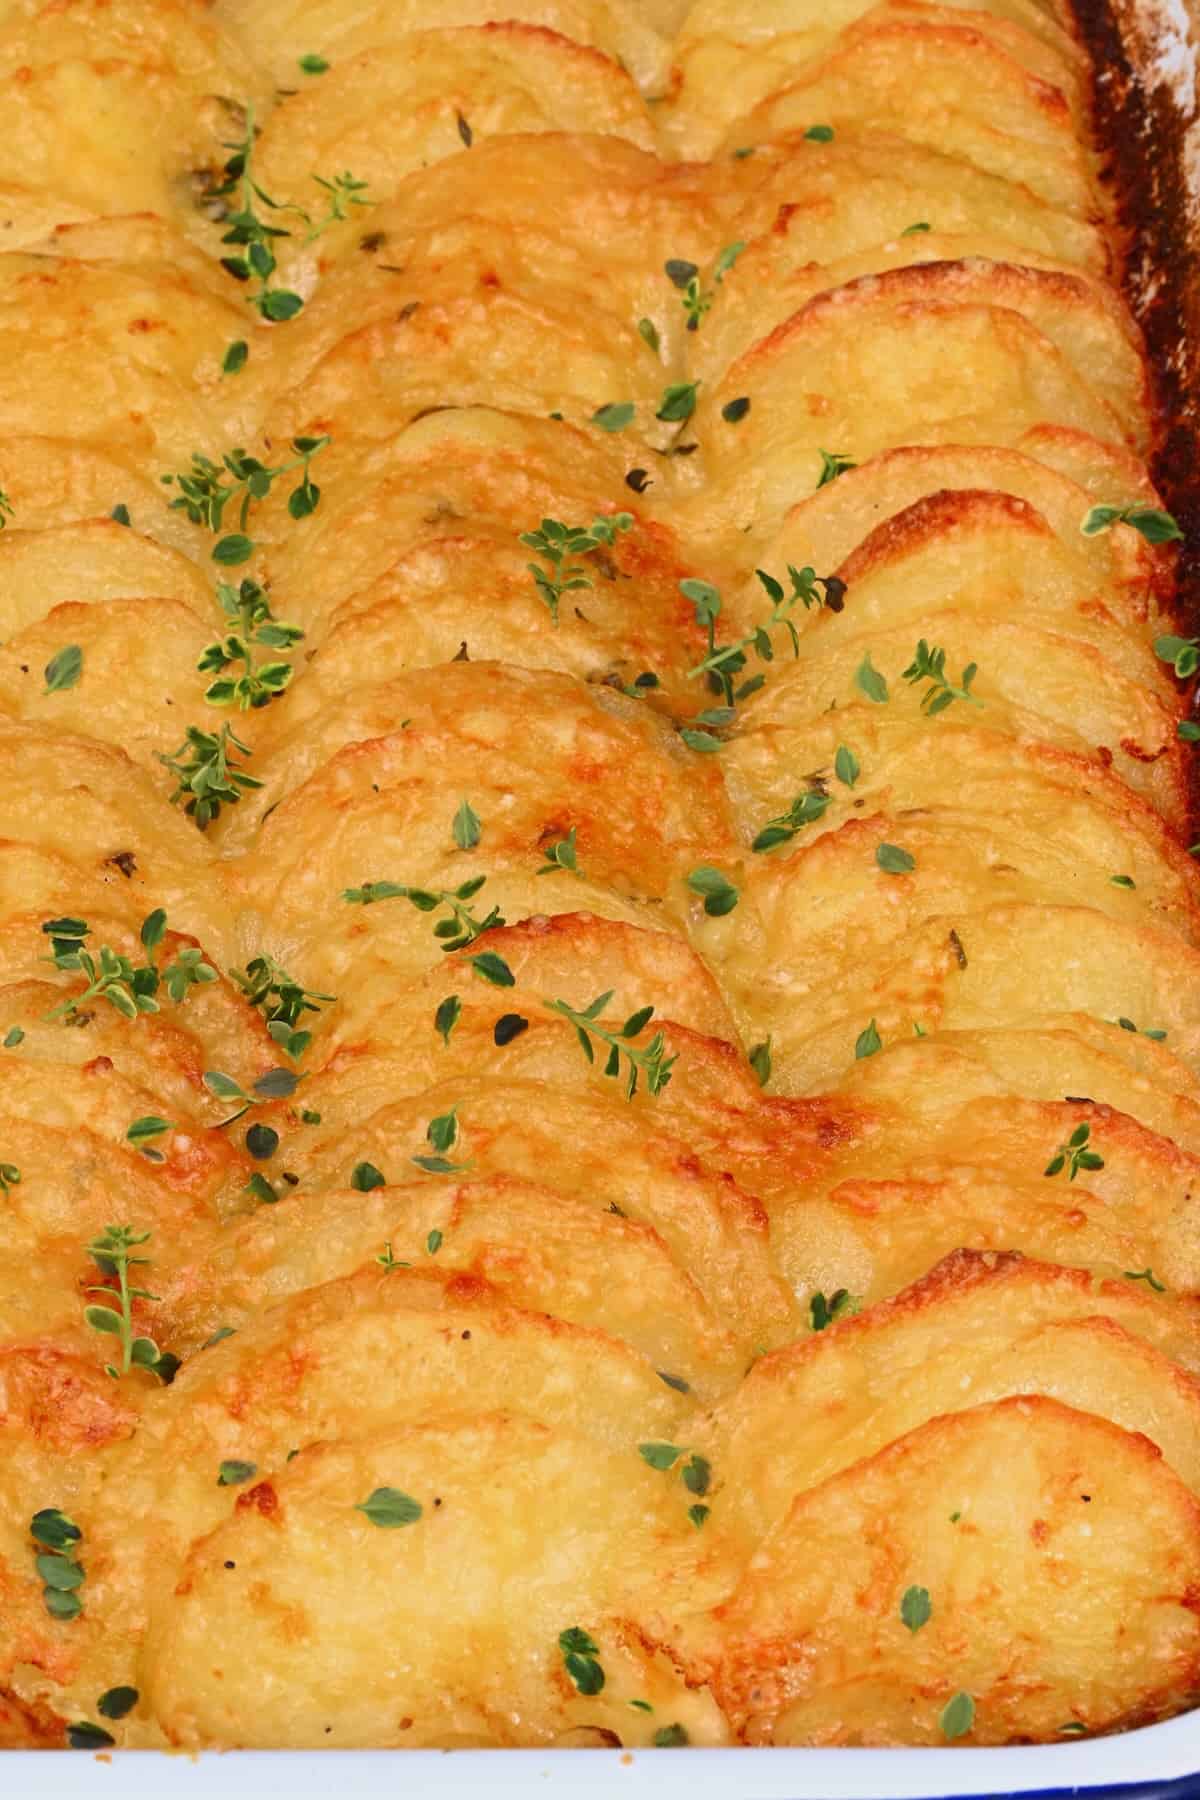 Freshly baked potatoes au gratin